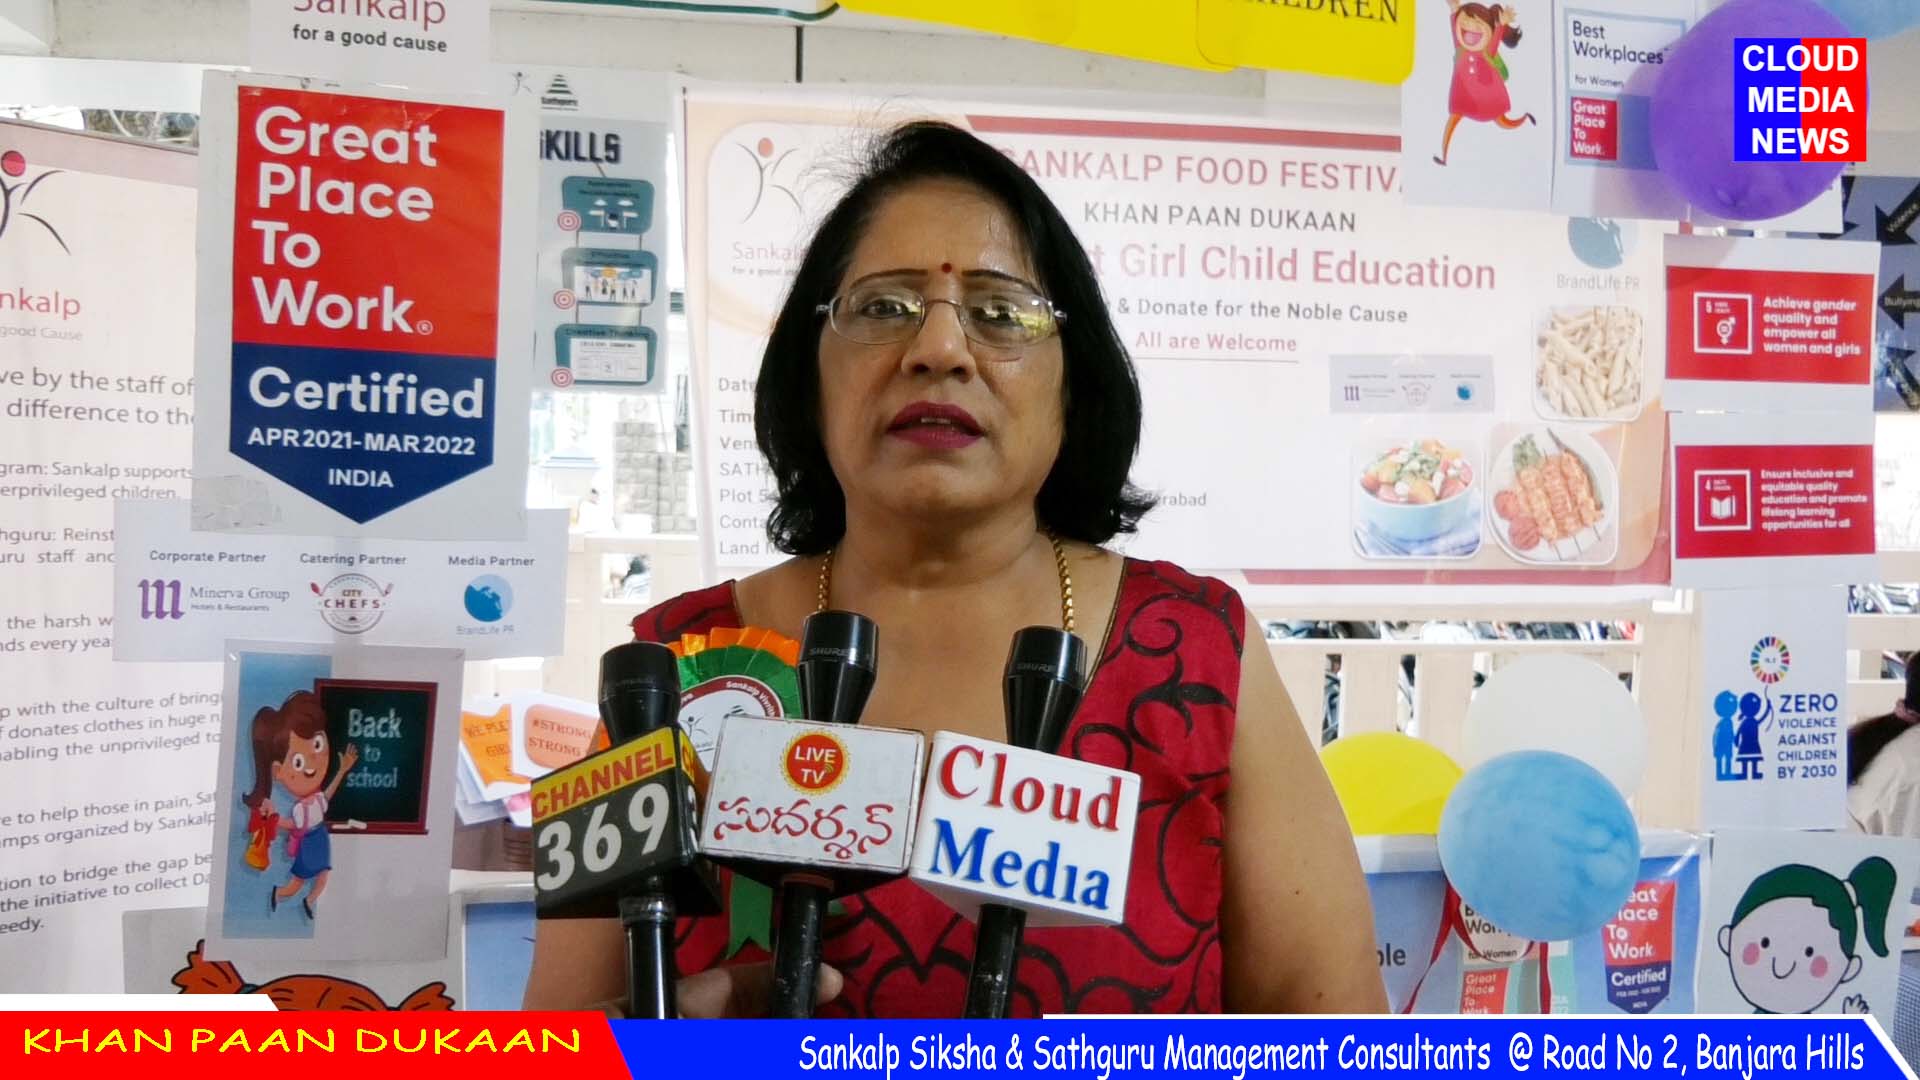 Watch Khan Paan Dukaan Sankalp Siksha & Sathguru Management Consultants CloudMedia CloudMediaNews